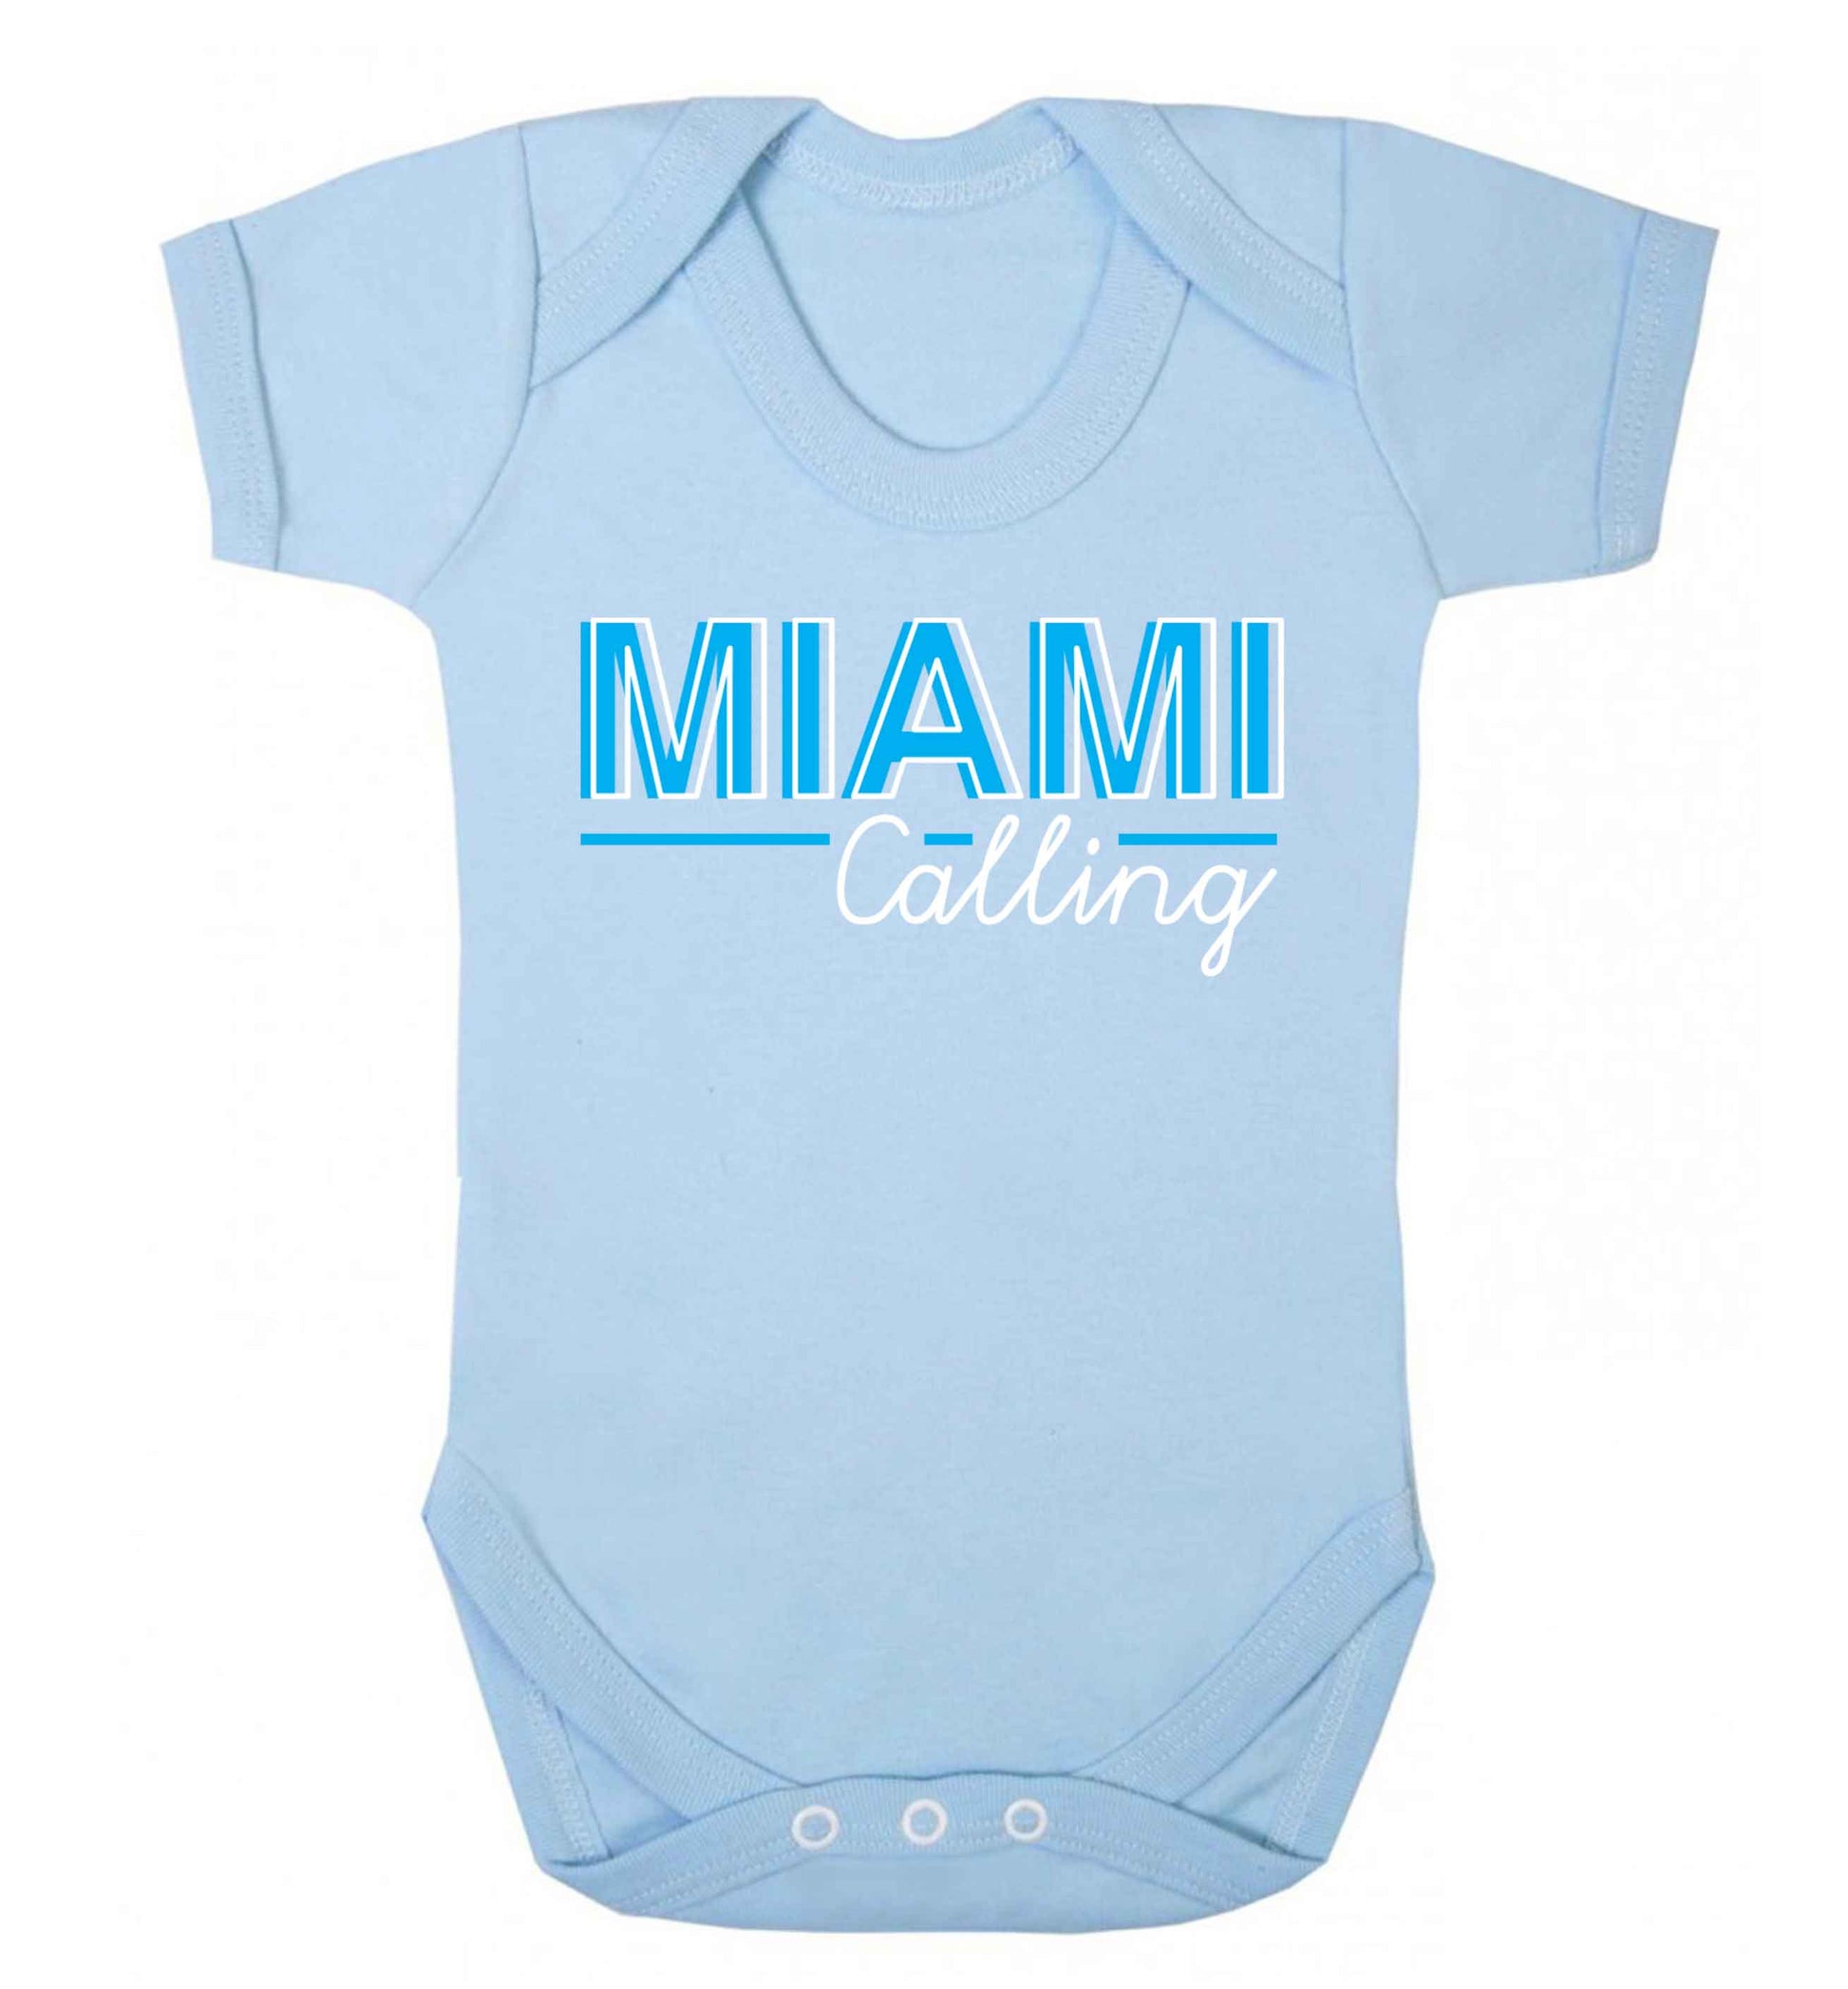 Miami calling Baby Vest pale blue 18-24 months